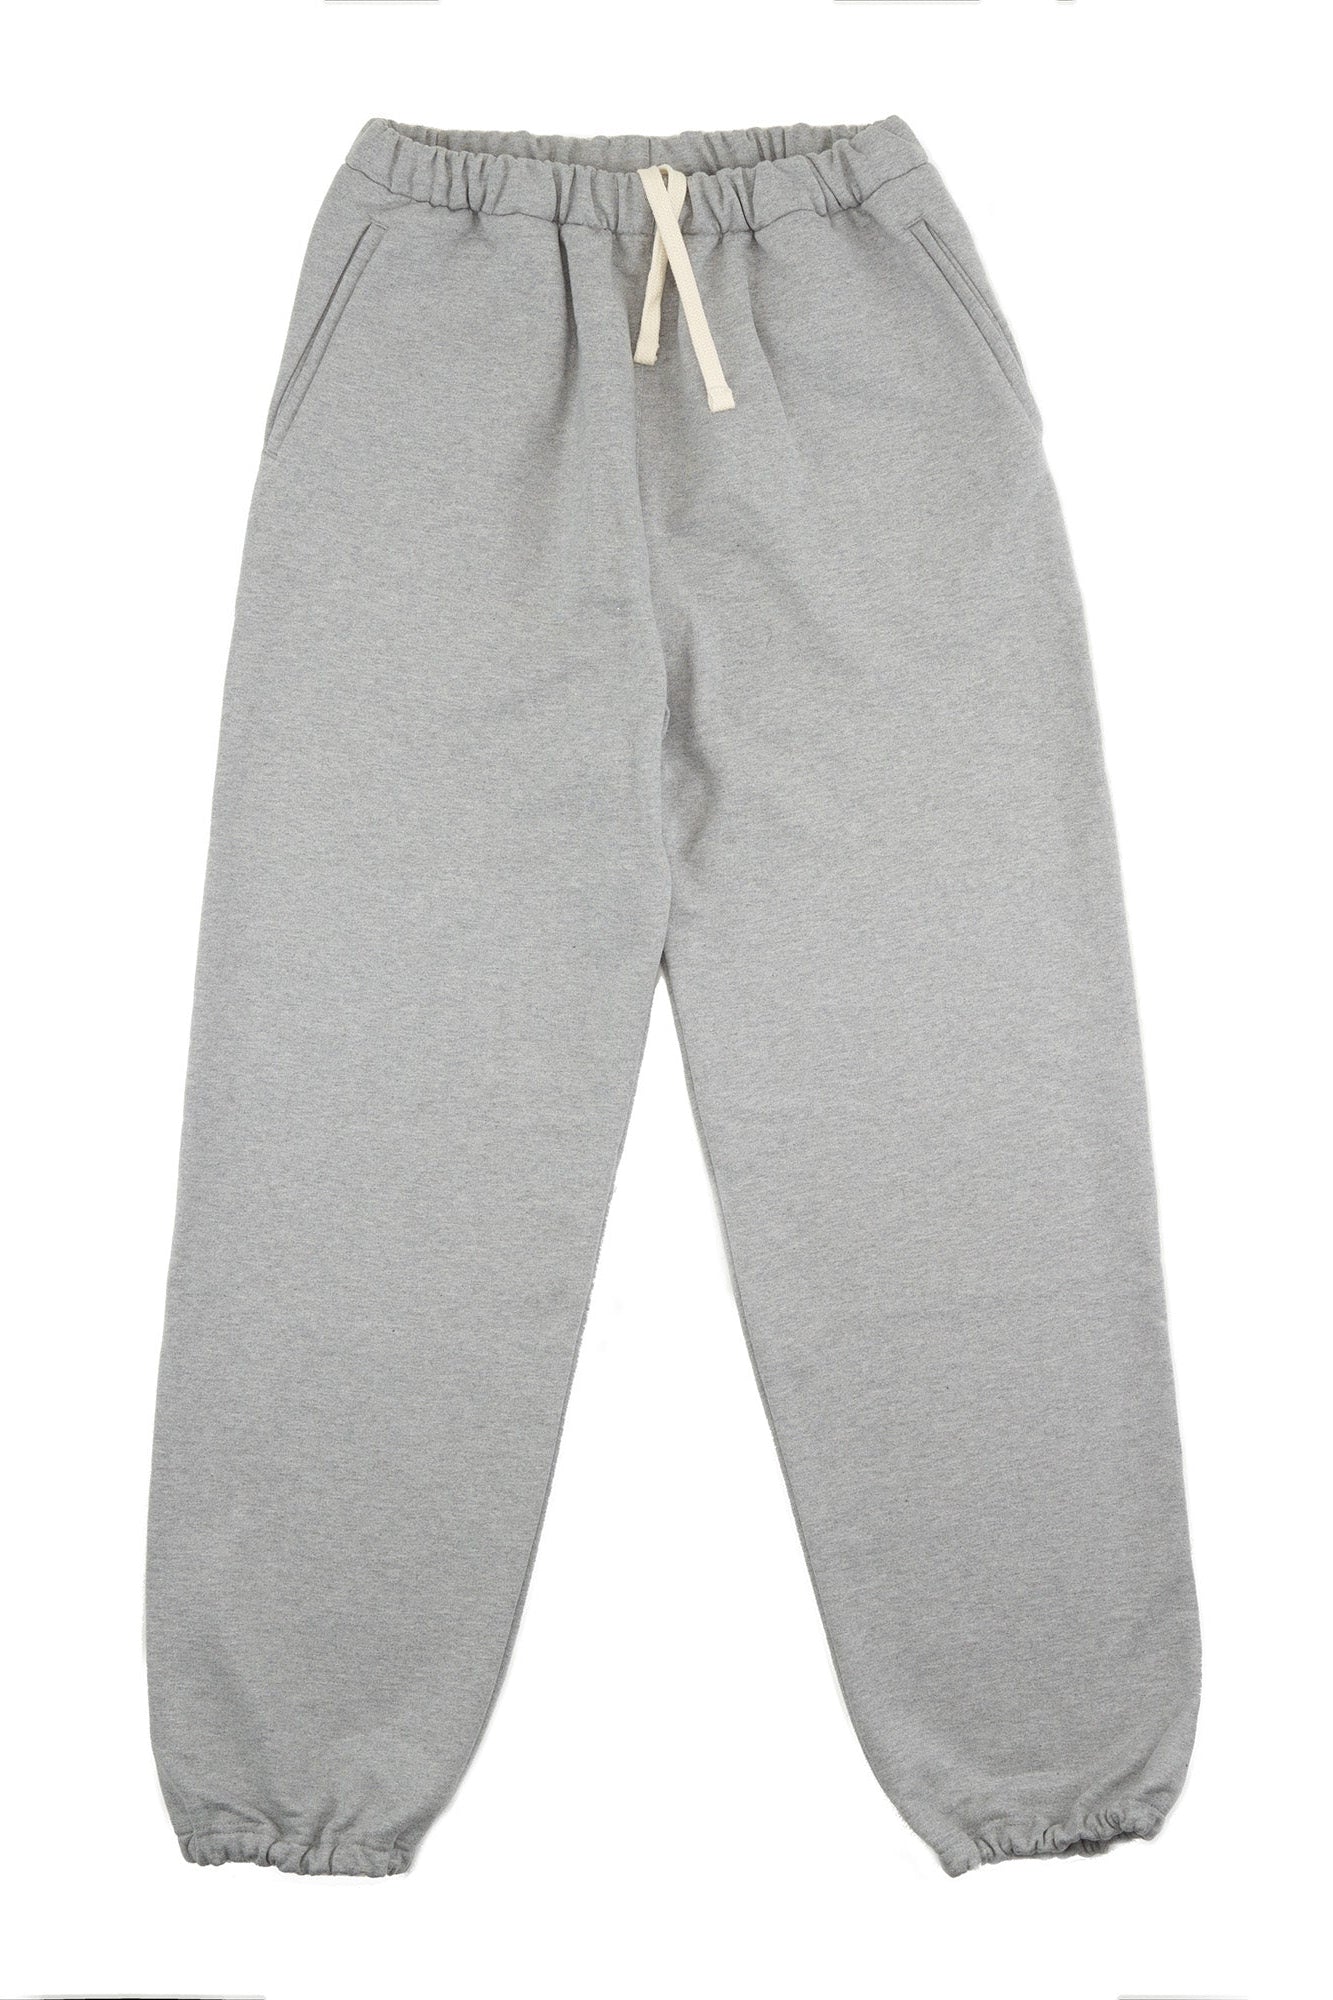 Men's Heritage Sweatpants - Grey Marl - Community Clothing